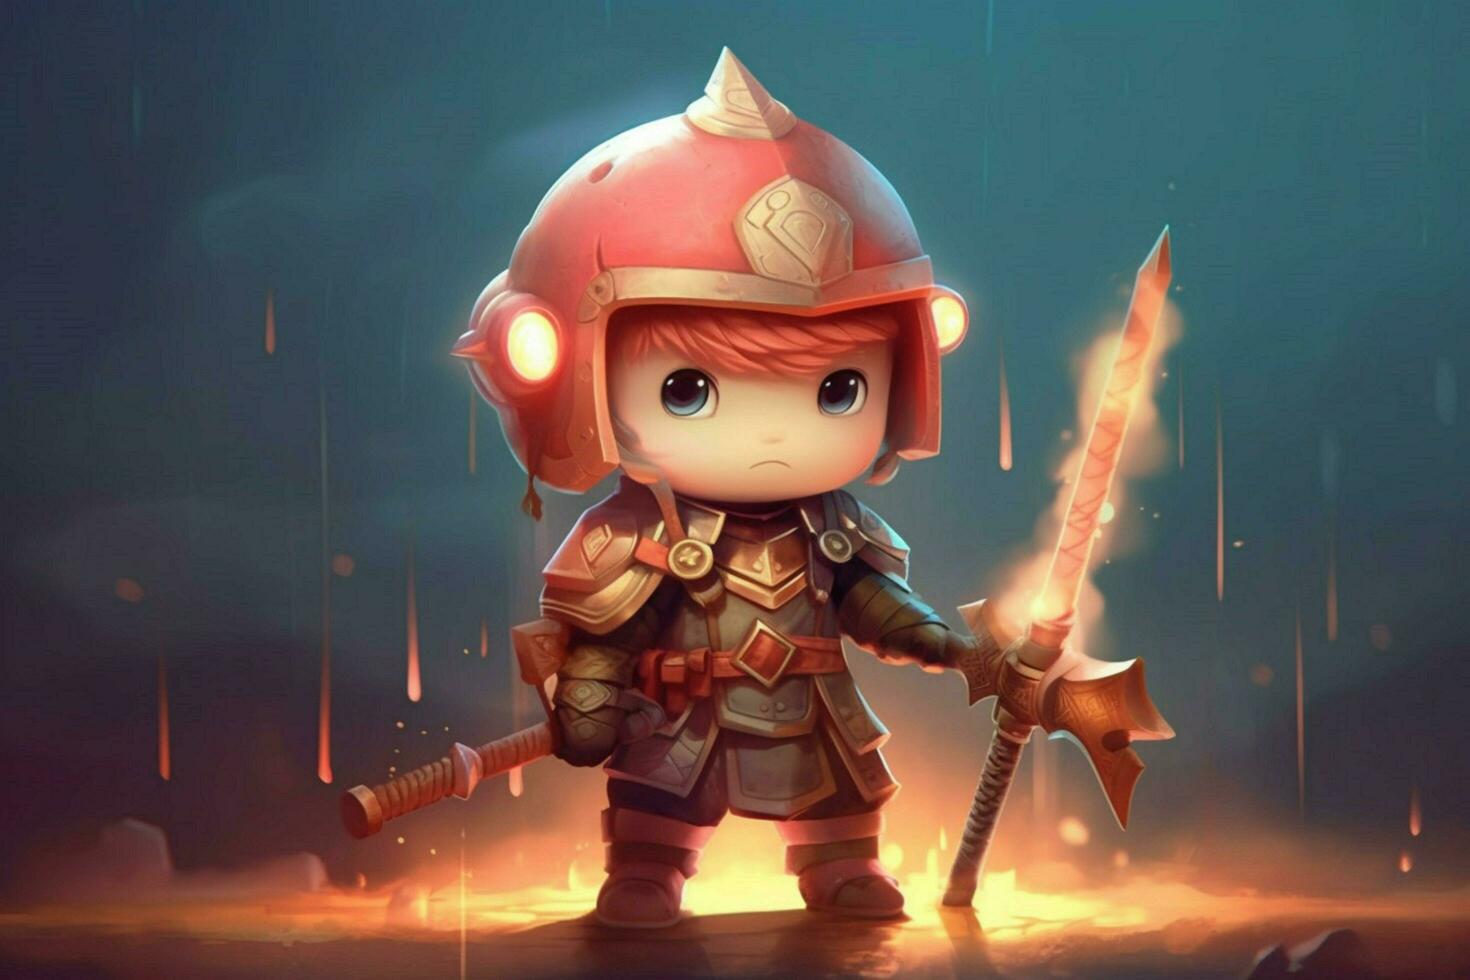 warrior cute man gaming fictional world photo